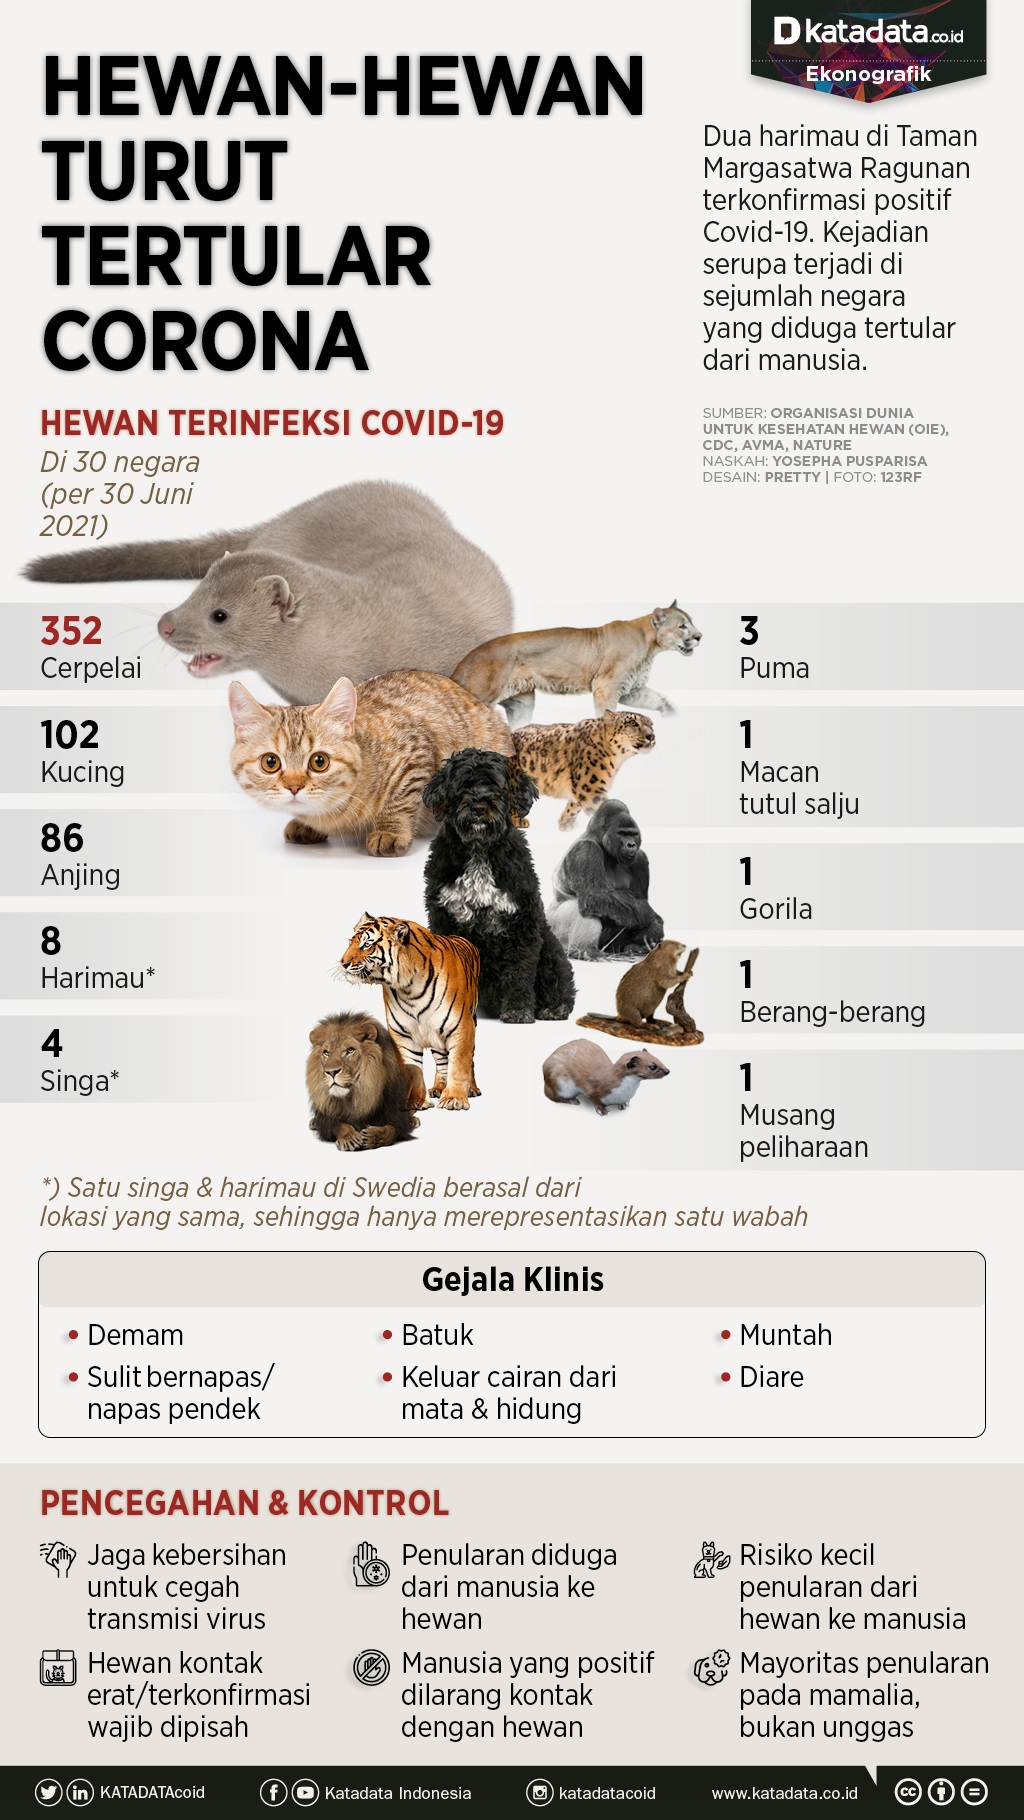 Infografik_Hewan-hewan turut tertular corona